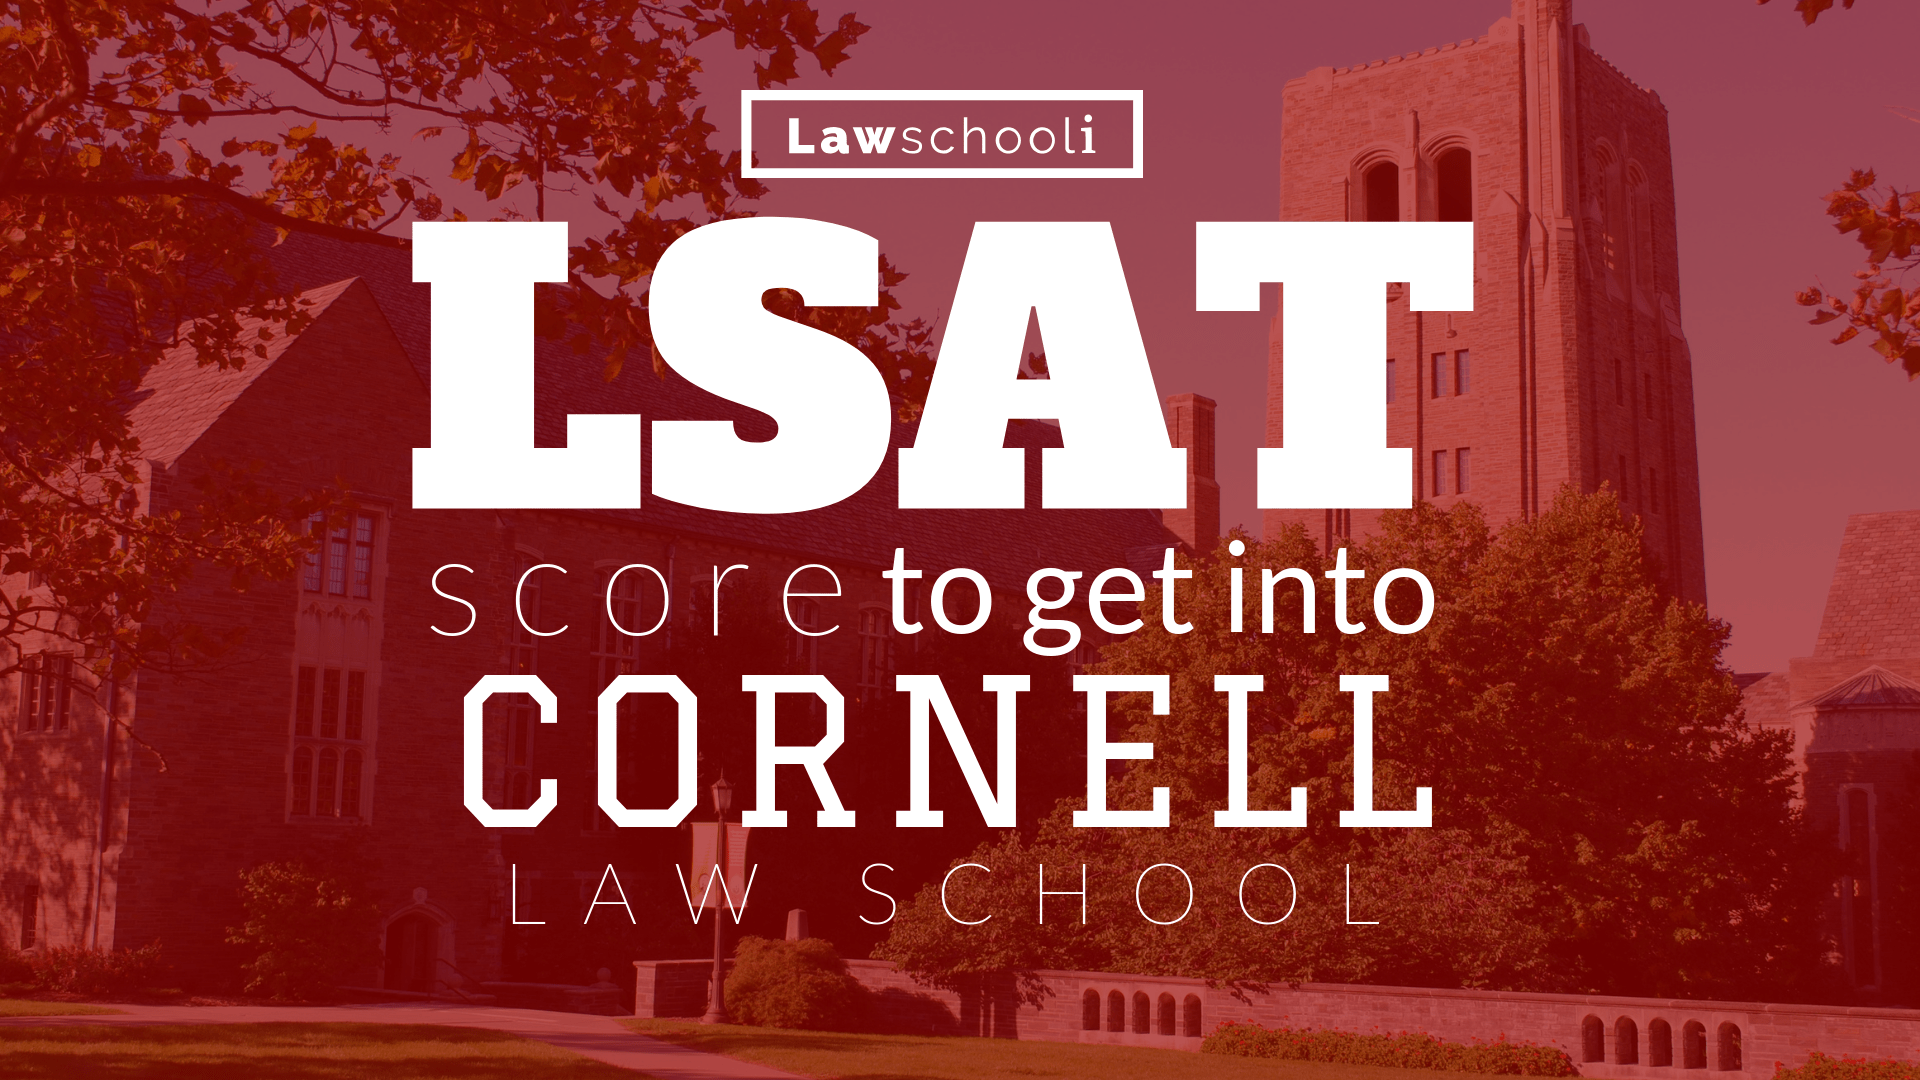 cornell law school